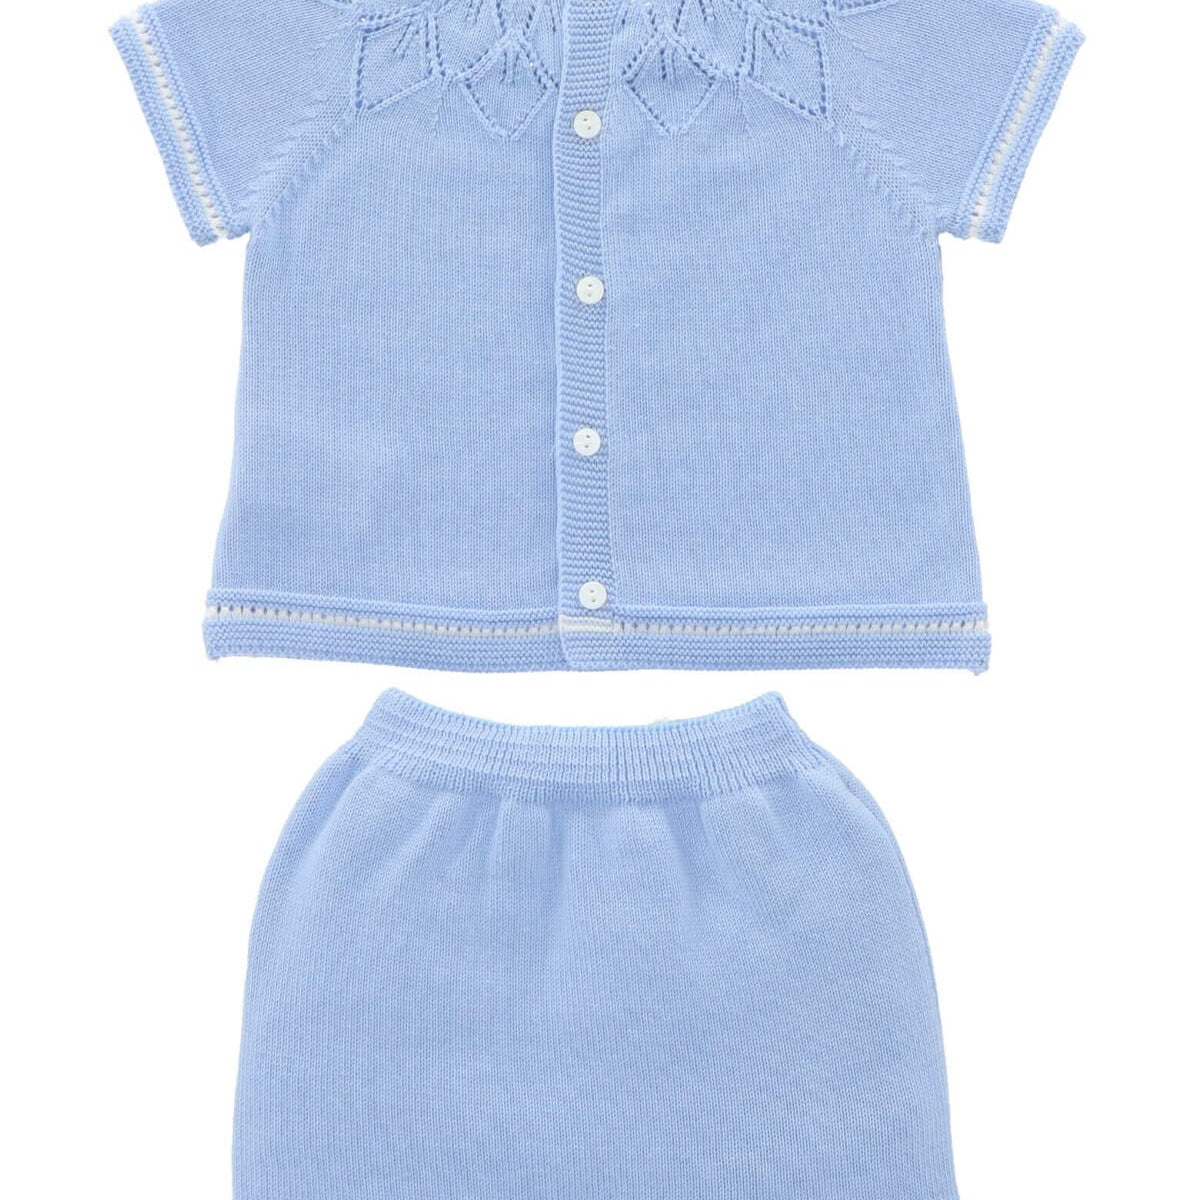 Blue Knit Jumper and Shorts by martin aranda